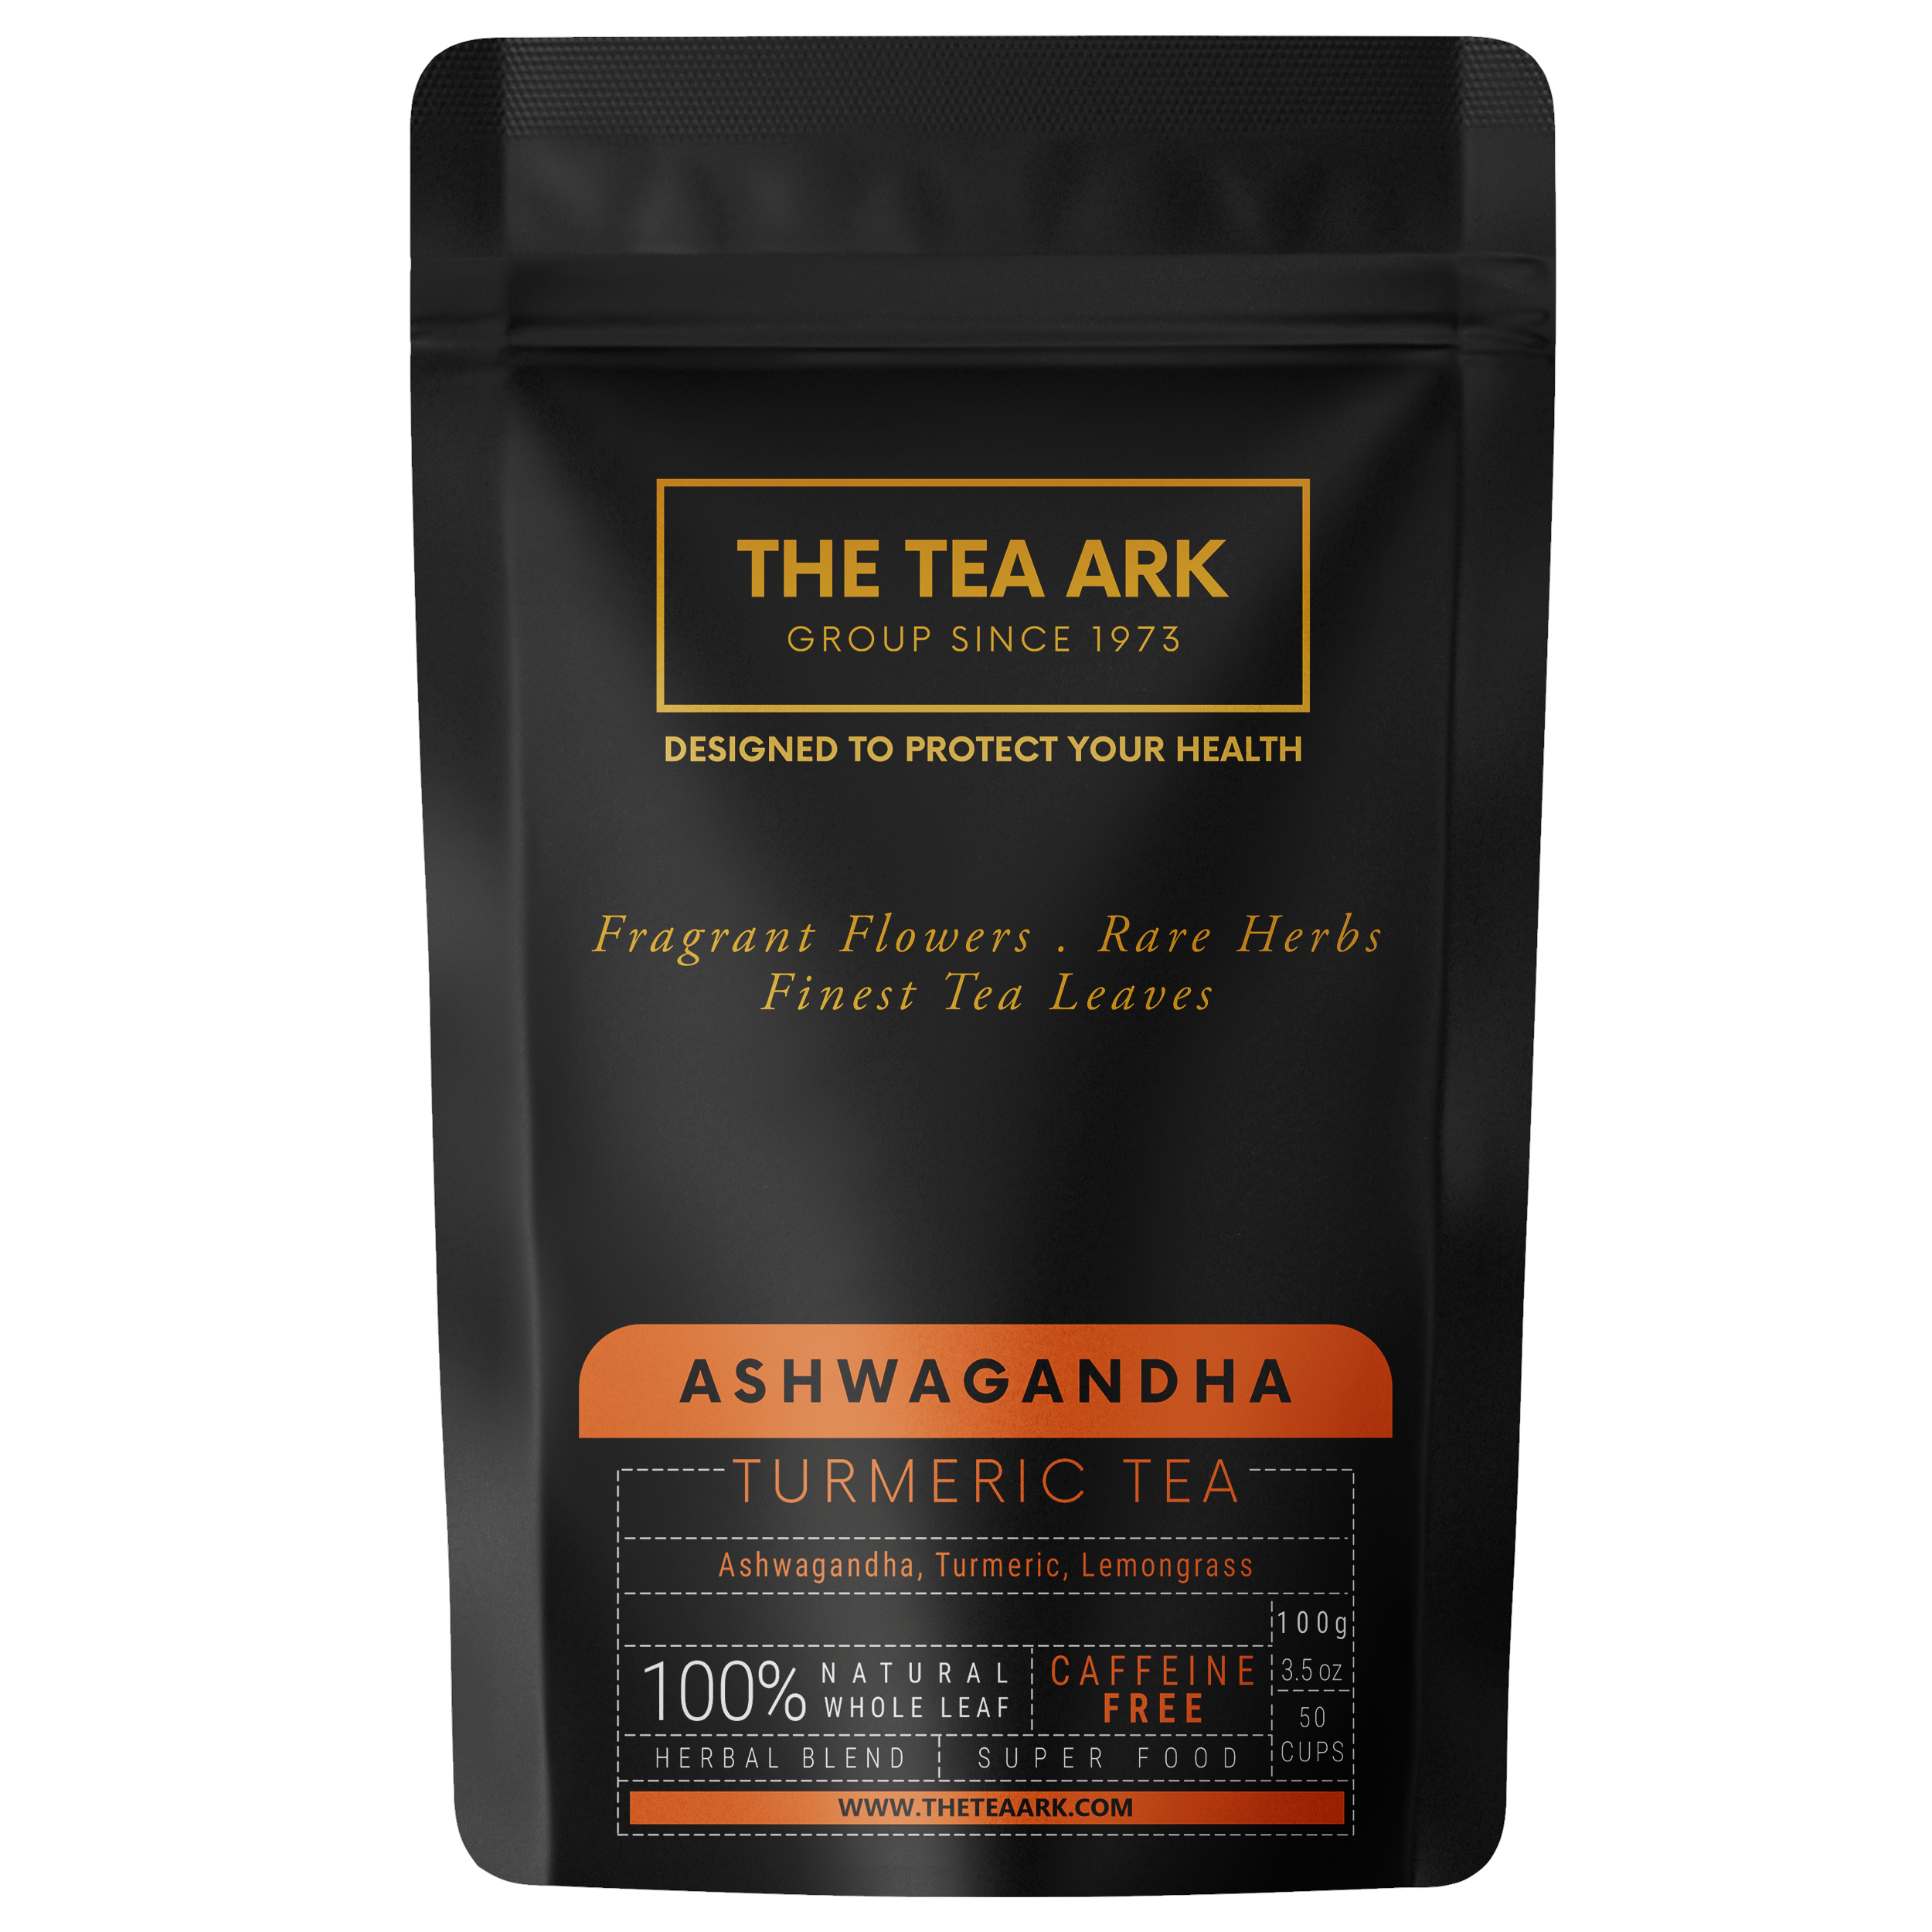 The Tea Ark Ashwagandha, Turmeric Tea